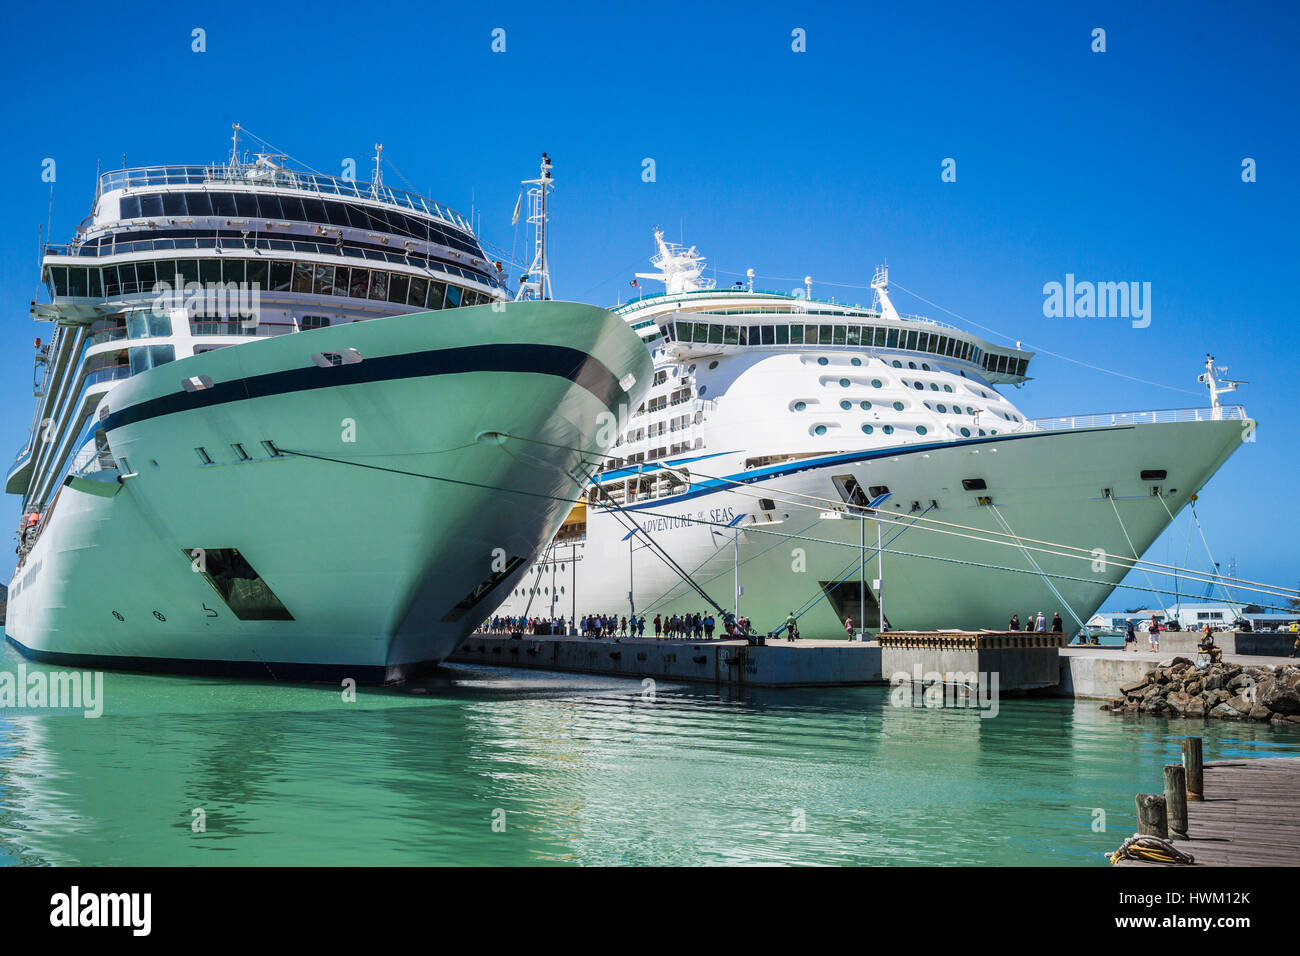 antigua st john's cruise liners in port Stock Photo